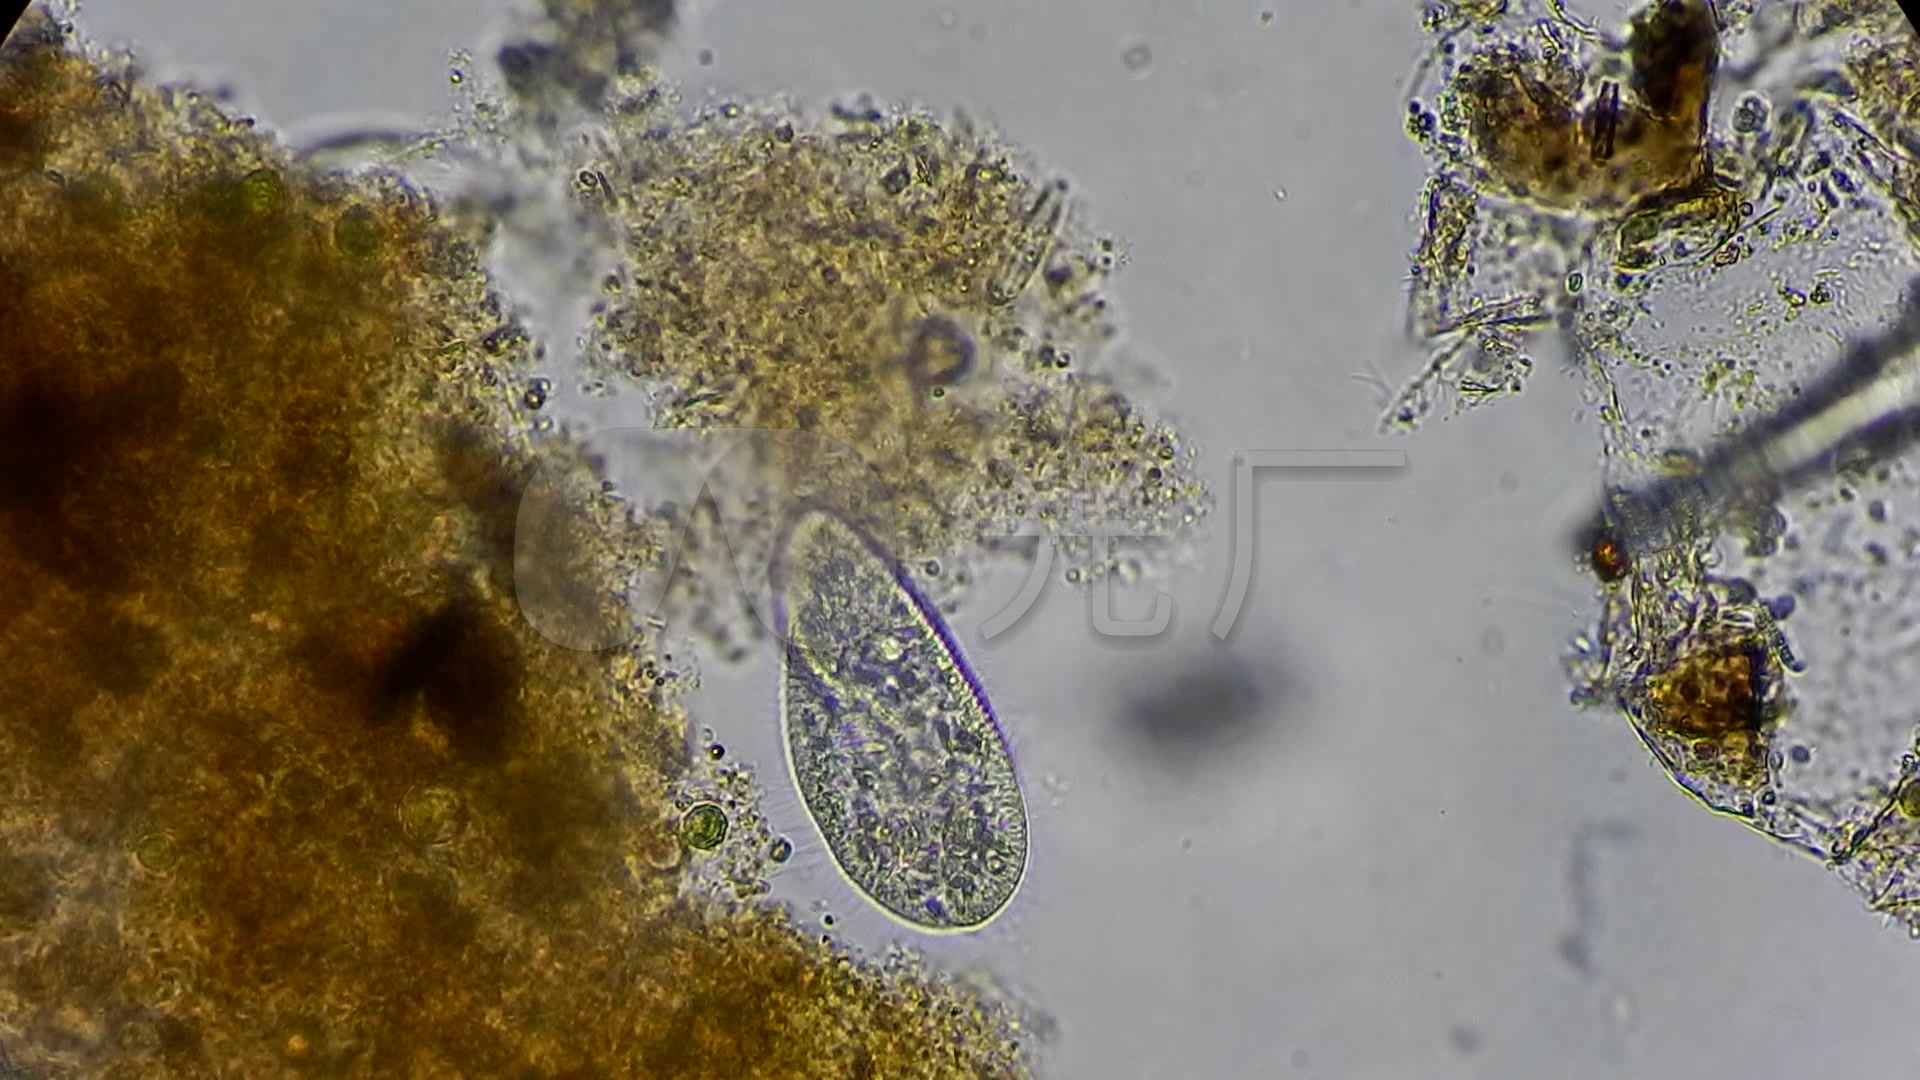 MicrobeWorld handprint bacteria photo by Tasha Sturm - Business Insider